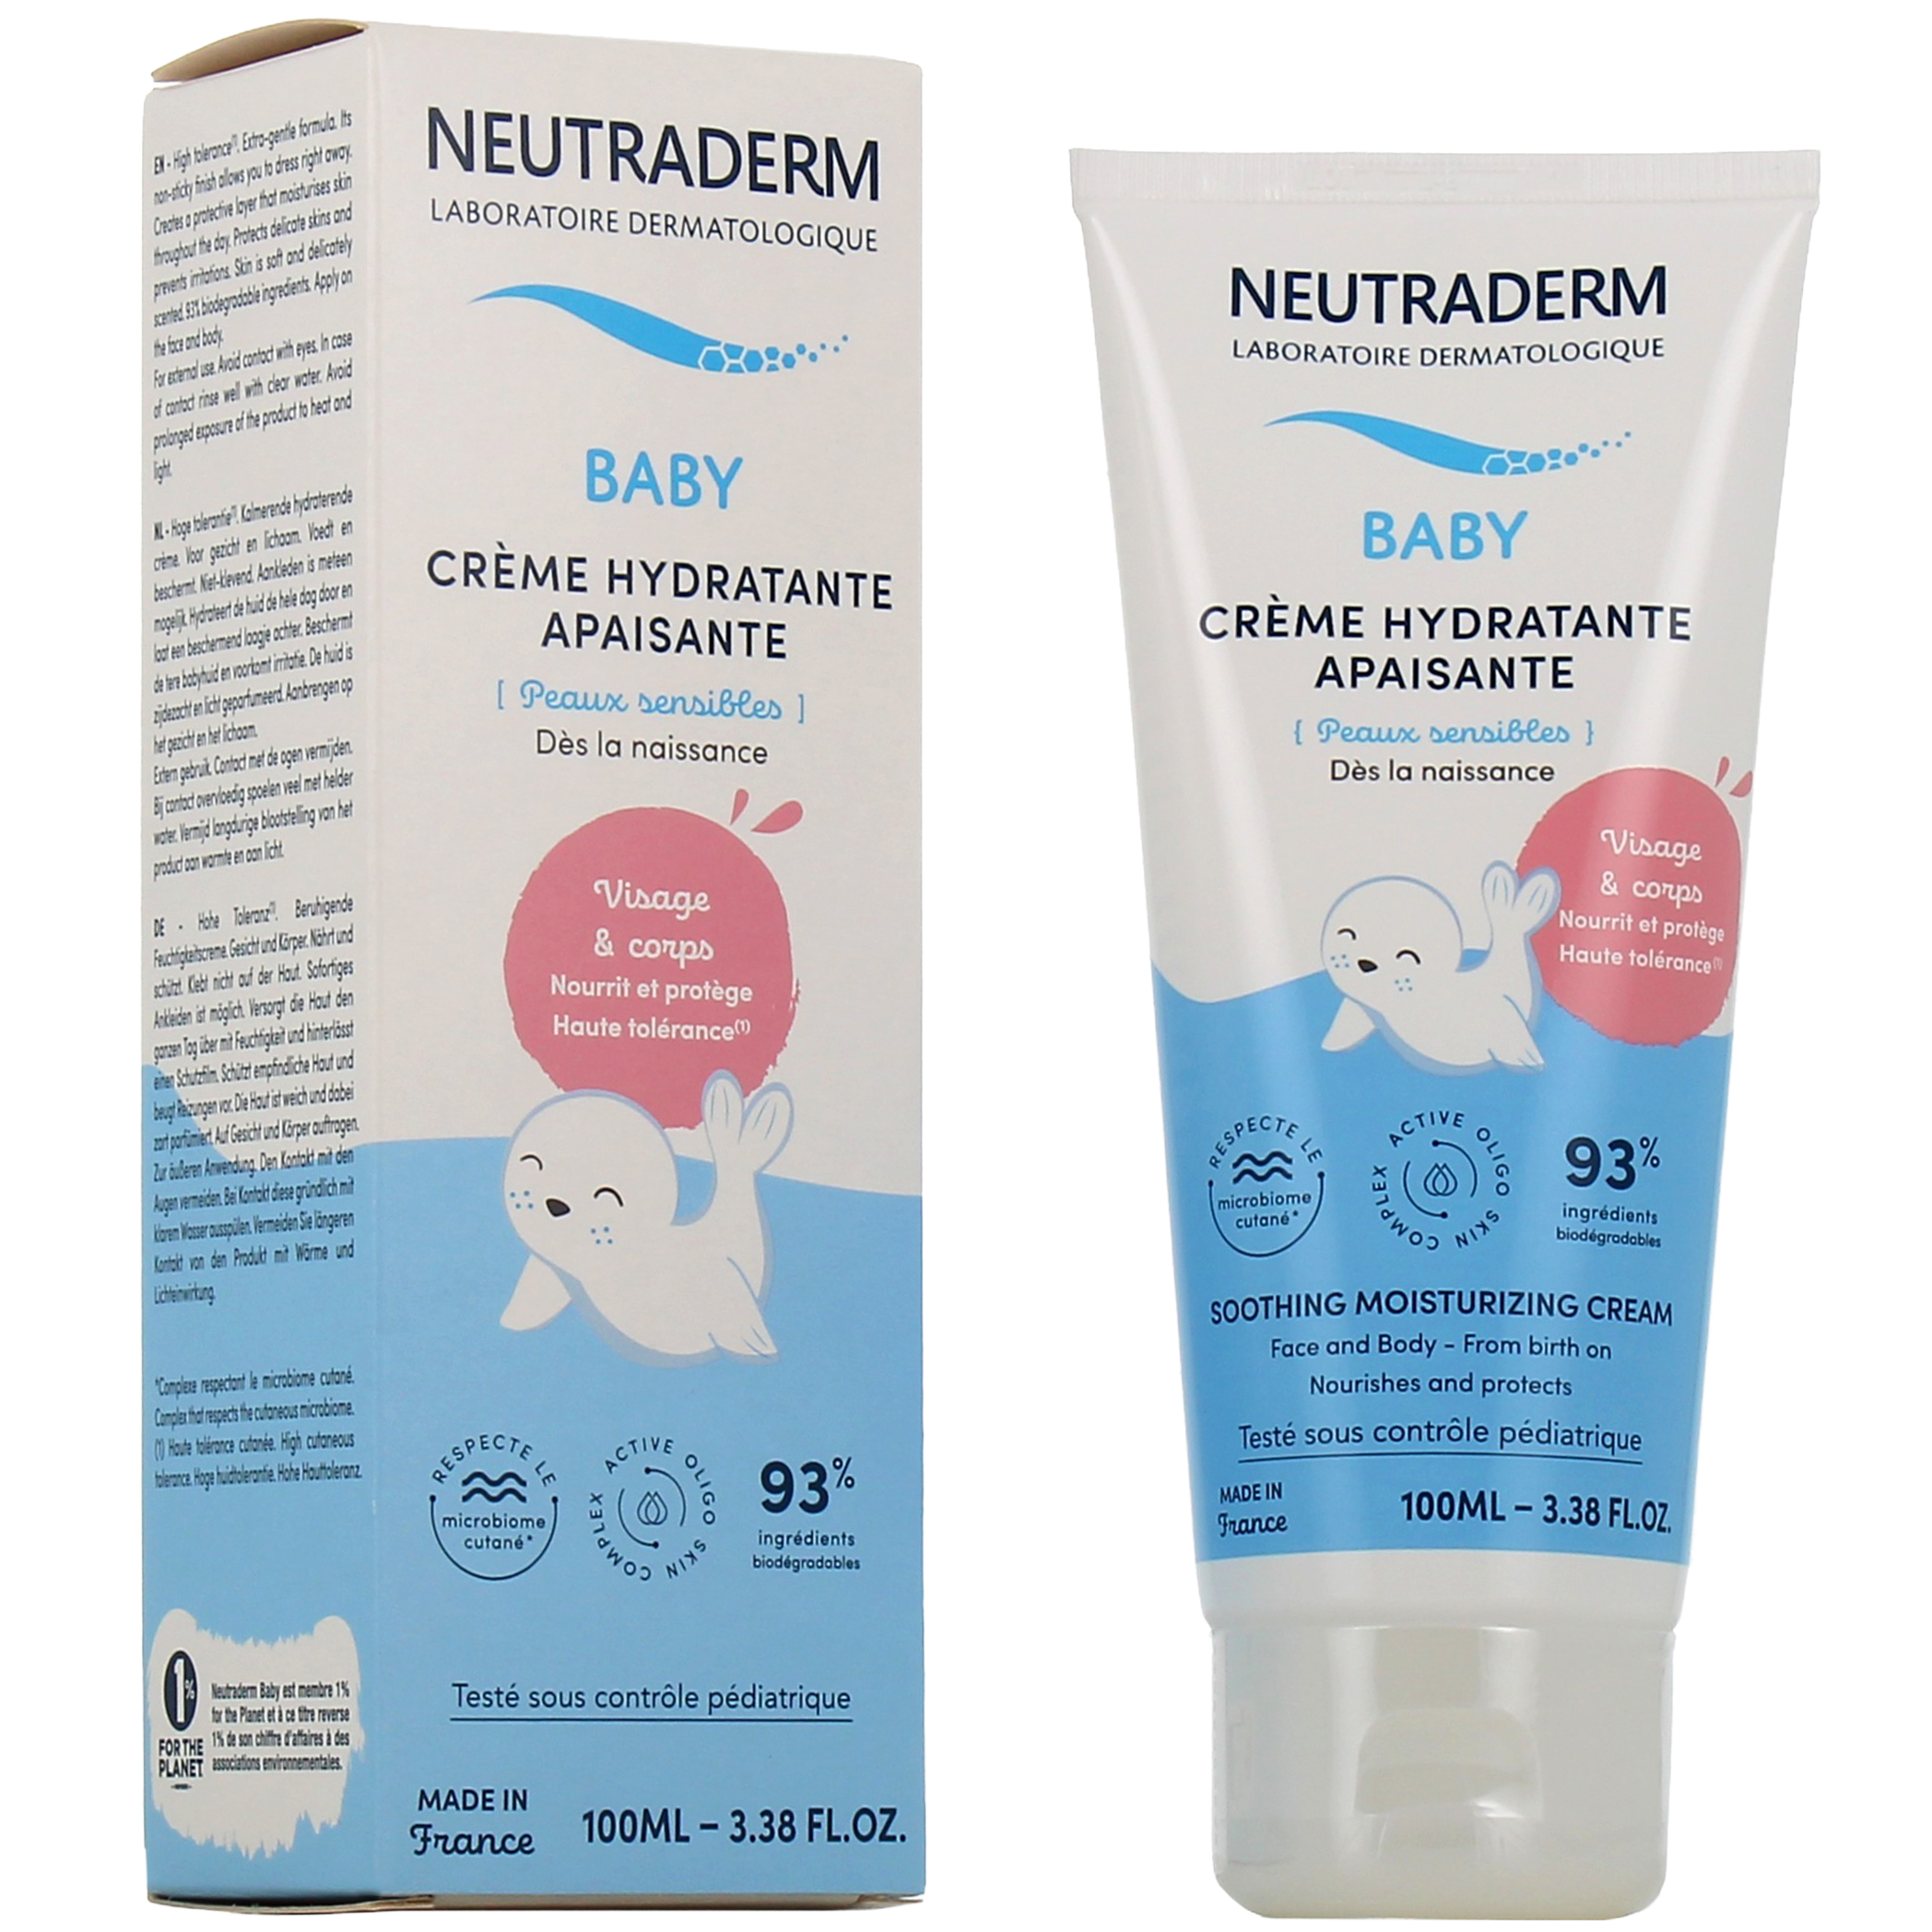 Crème hydratante bébé - Neodoo - 50ml